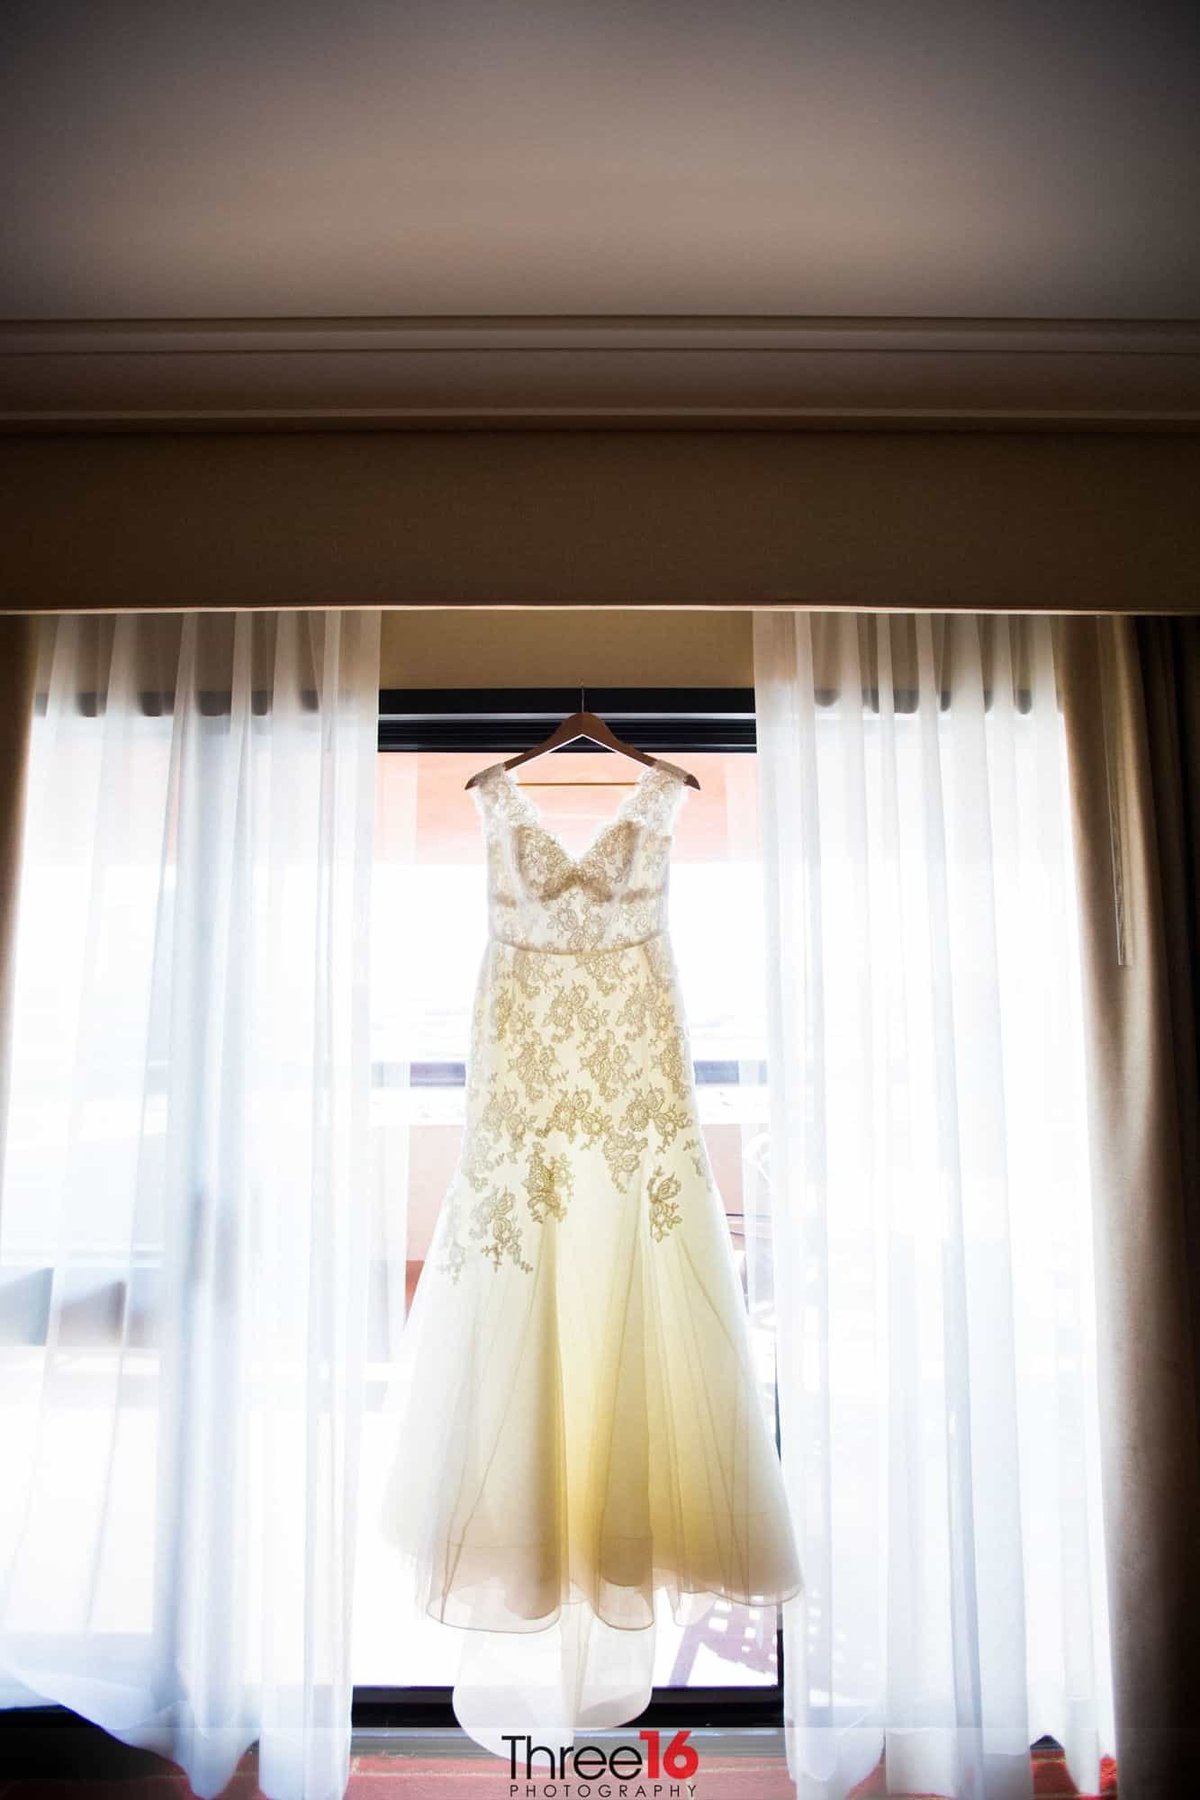 Bride's beautiful wedding dress hanging on display